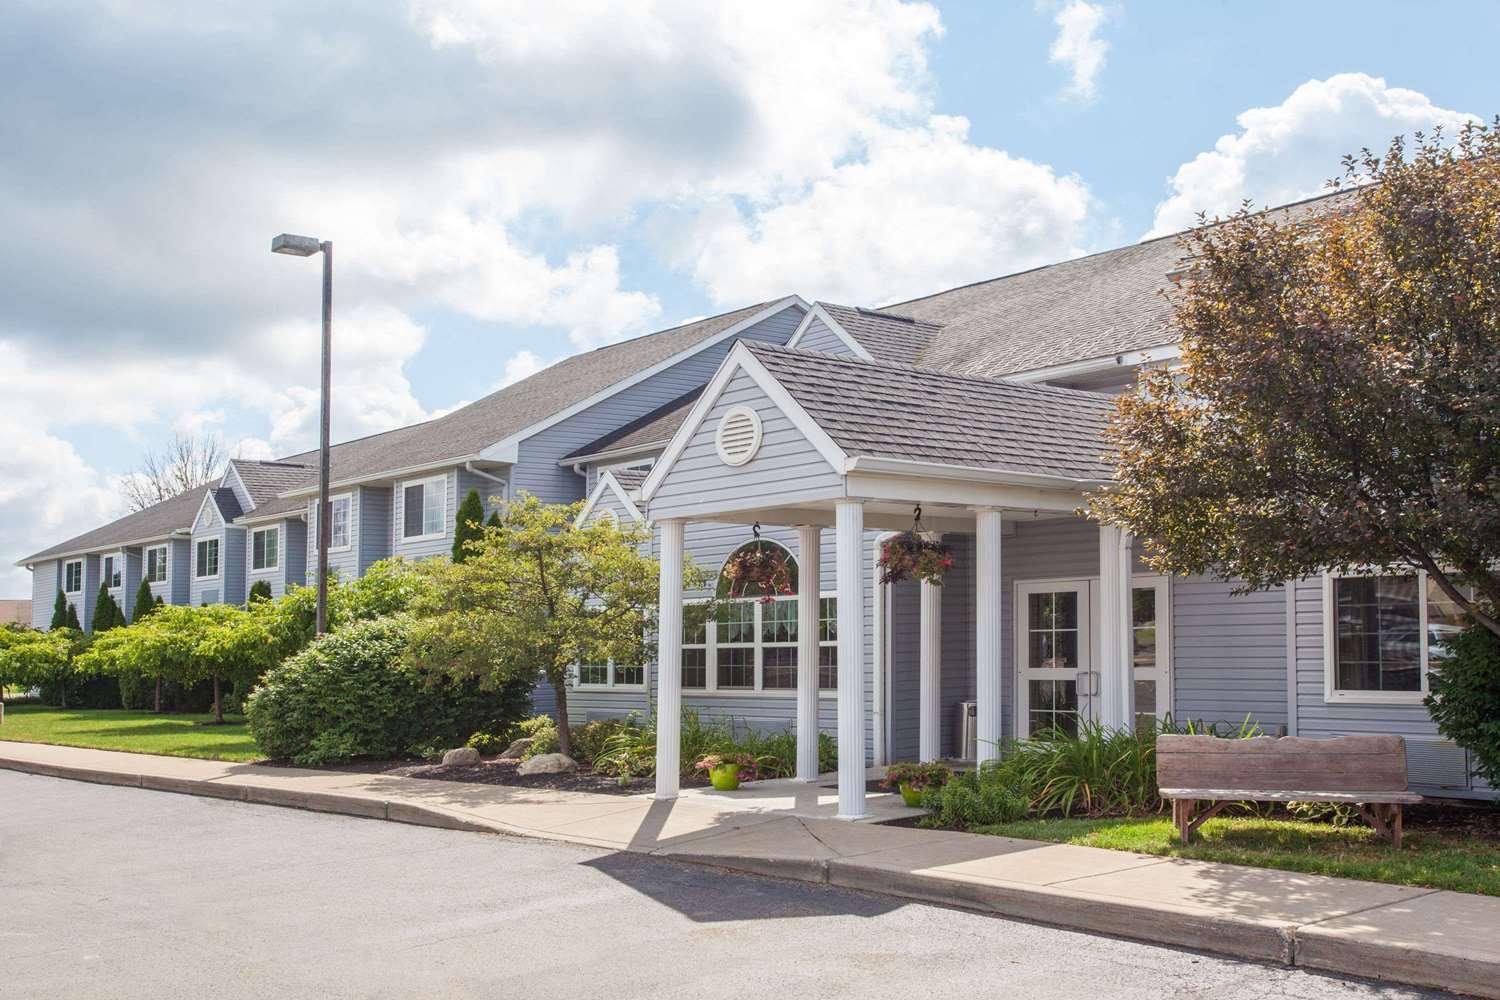 Microtel Inn & Suites by Wyndham Springville in Springville, NY